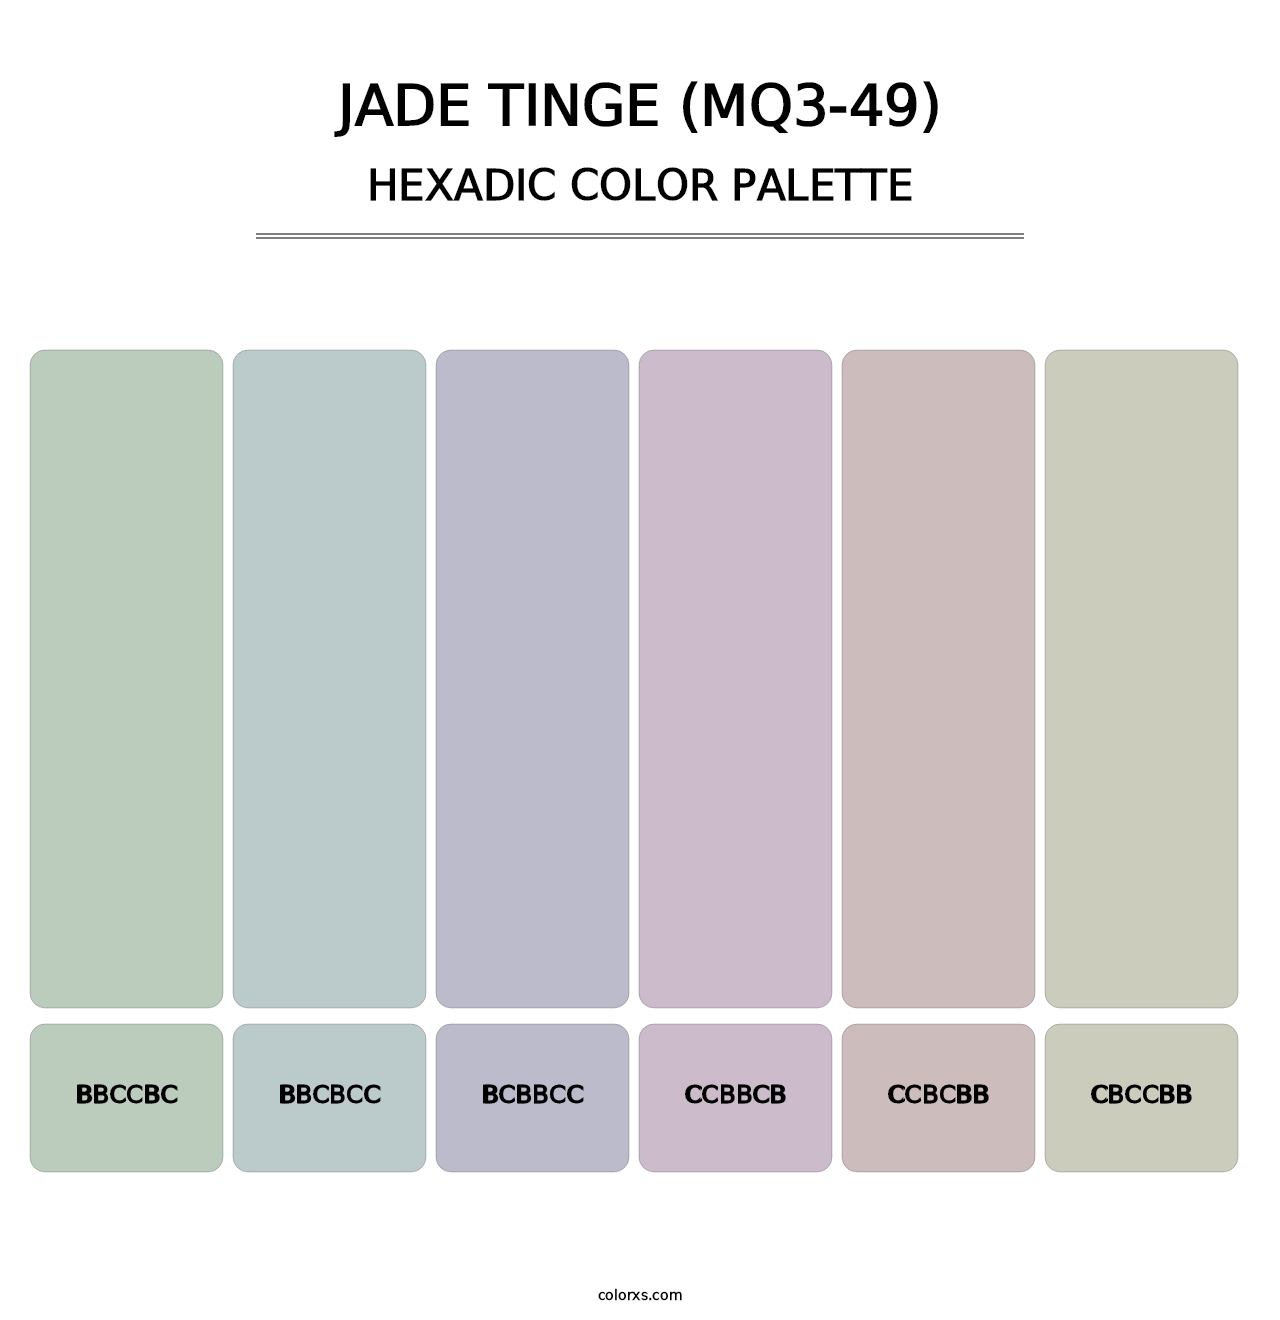 Jade Tinge (MQ3-49) - Hexadic Color Palette